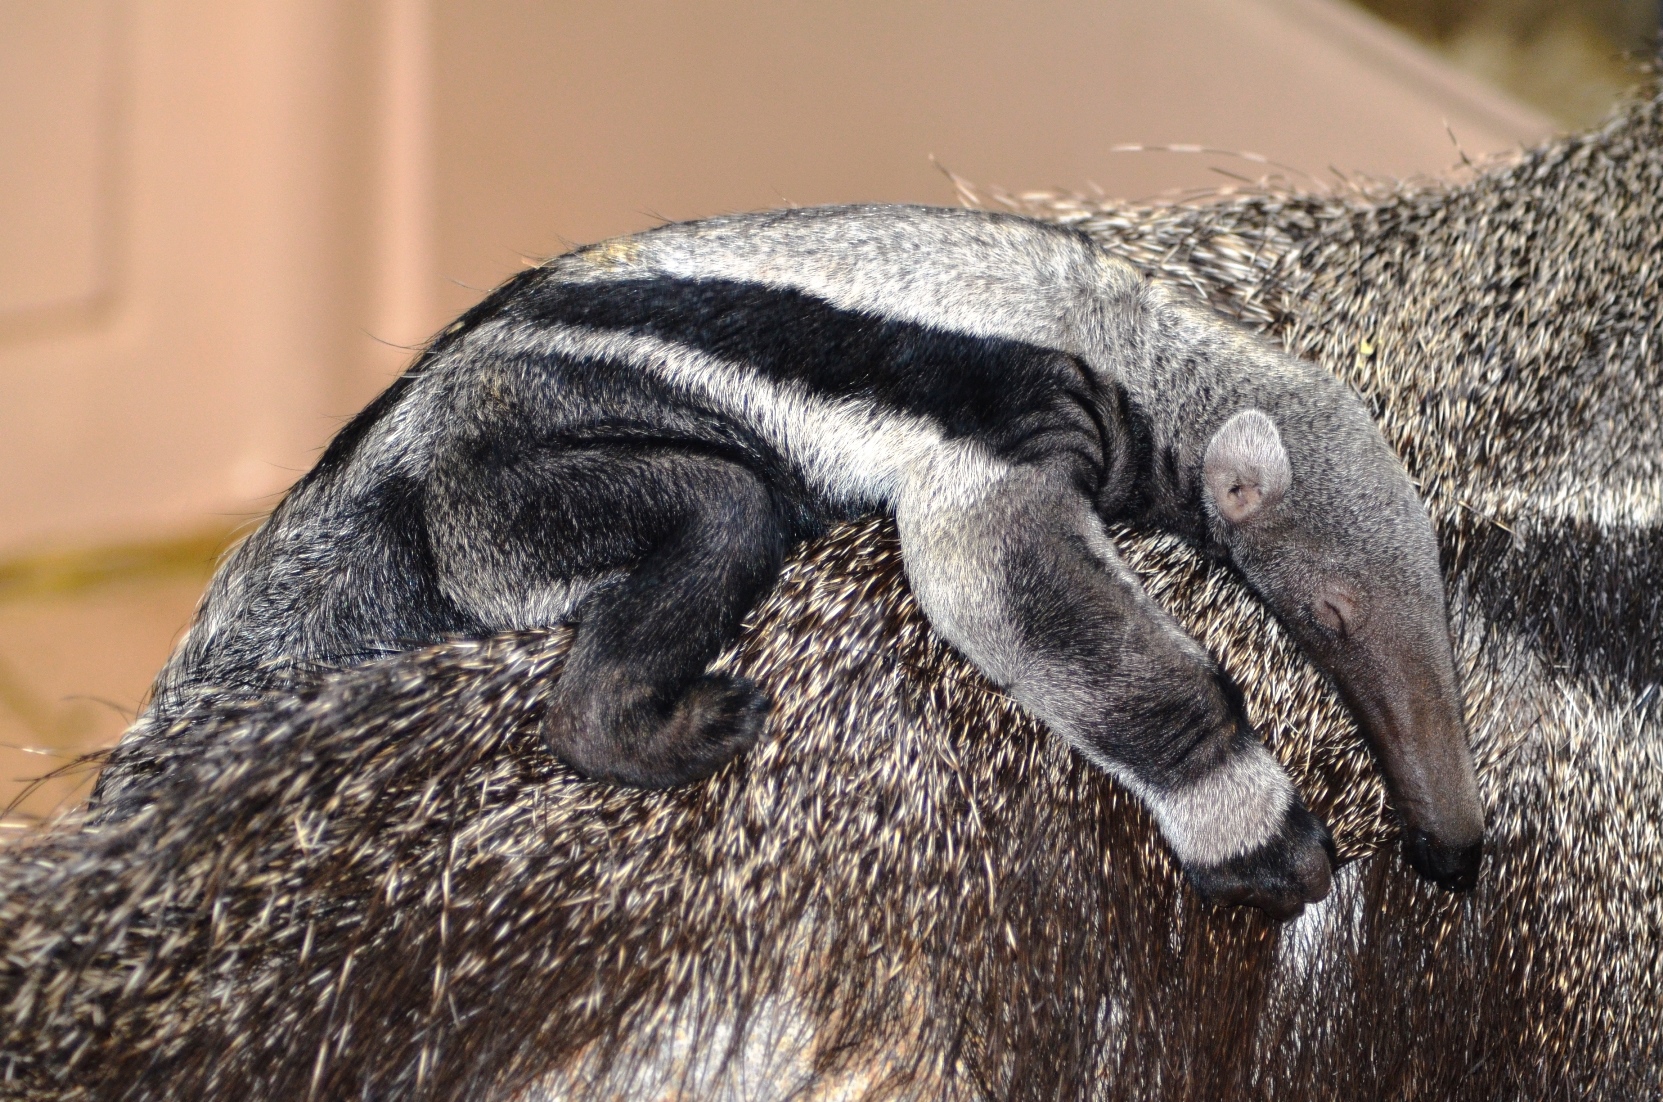 Virgin birth or hanky-panky? Anteater mom sparks a scientific debate